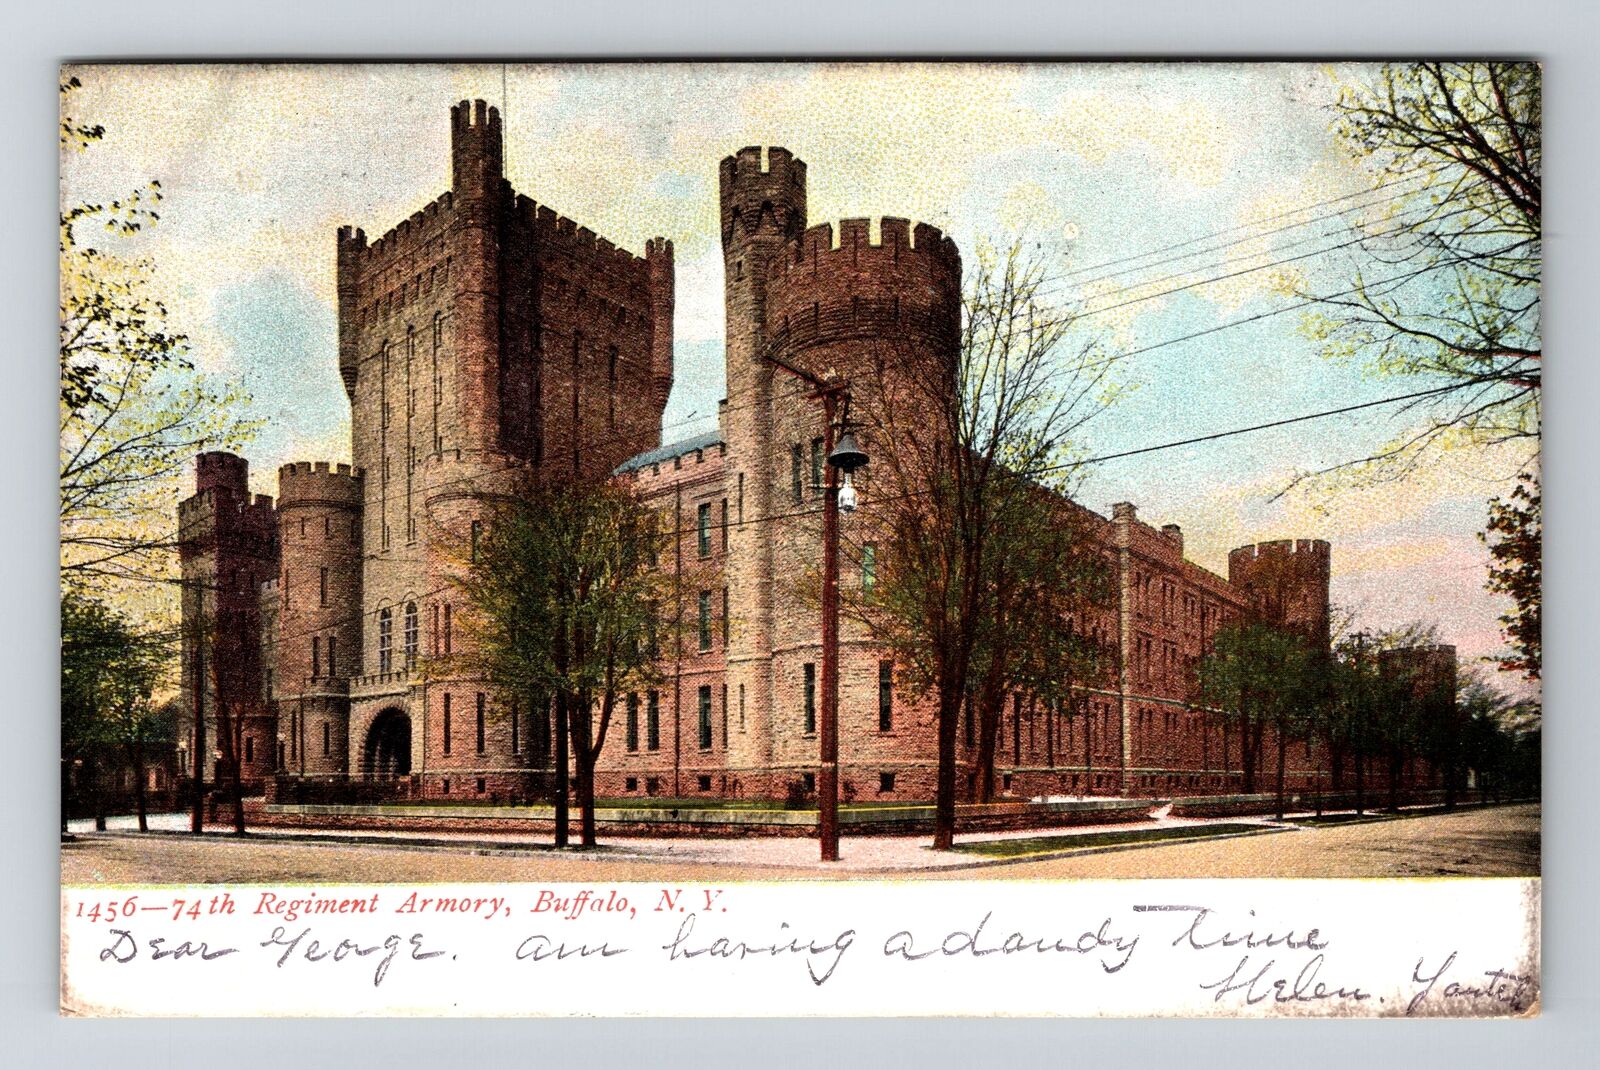 Buffalo NY-New York, 74th Regiment Armory, c1907 Vintage Souvenir Postcard